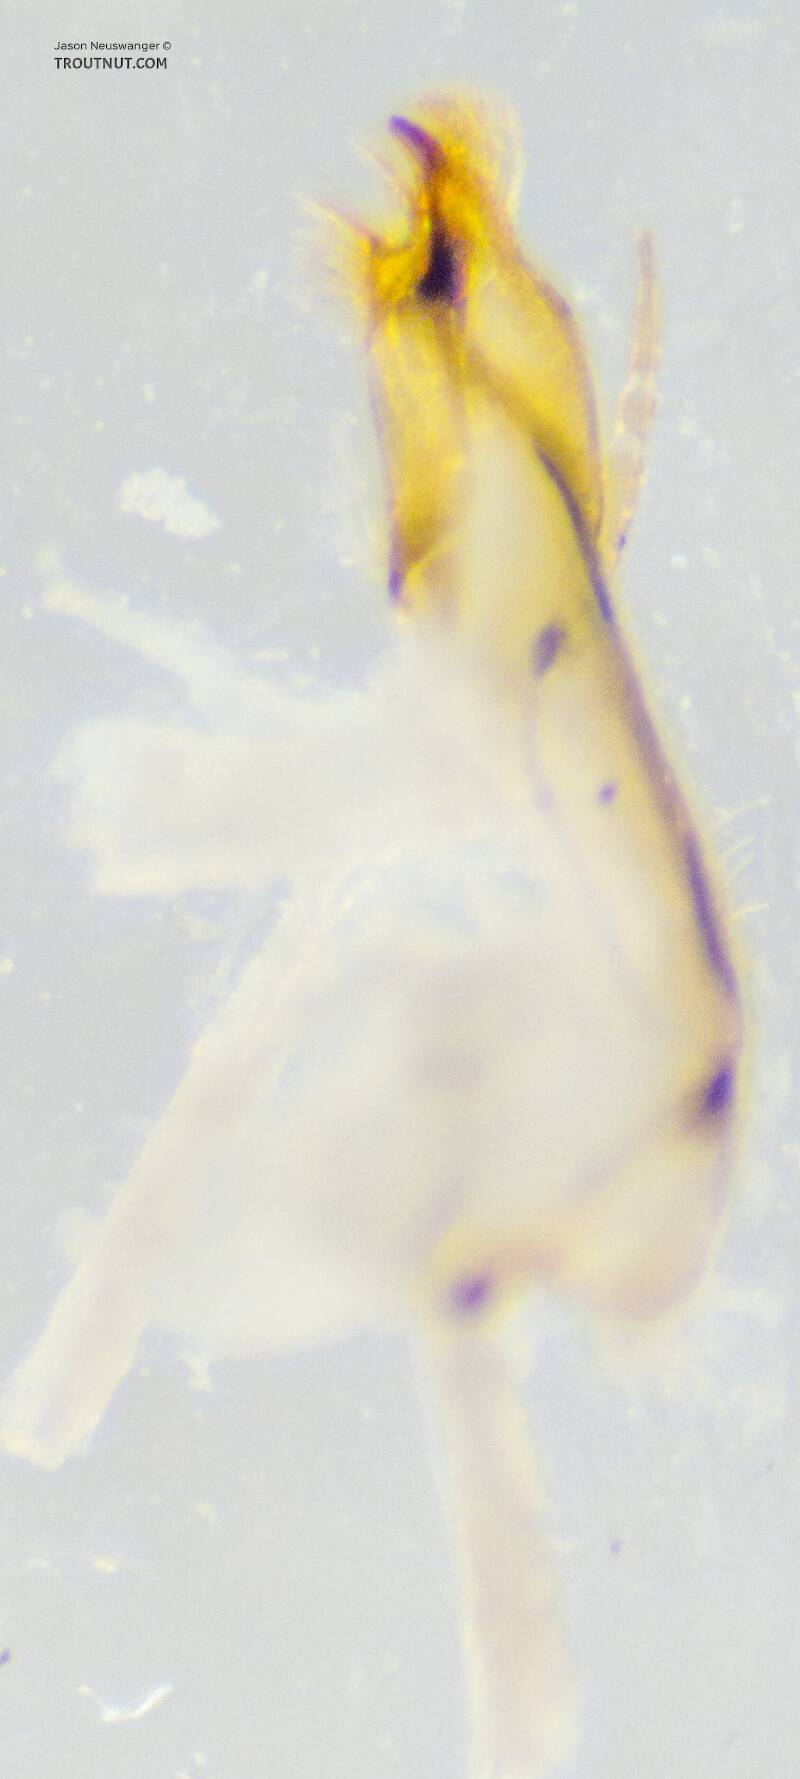 Dorsal view of the right maxilla

Ephemerella mucronata (Ephemerellidae) Mayfly Nymph from the Yakima River in Washington